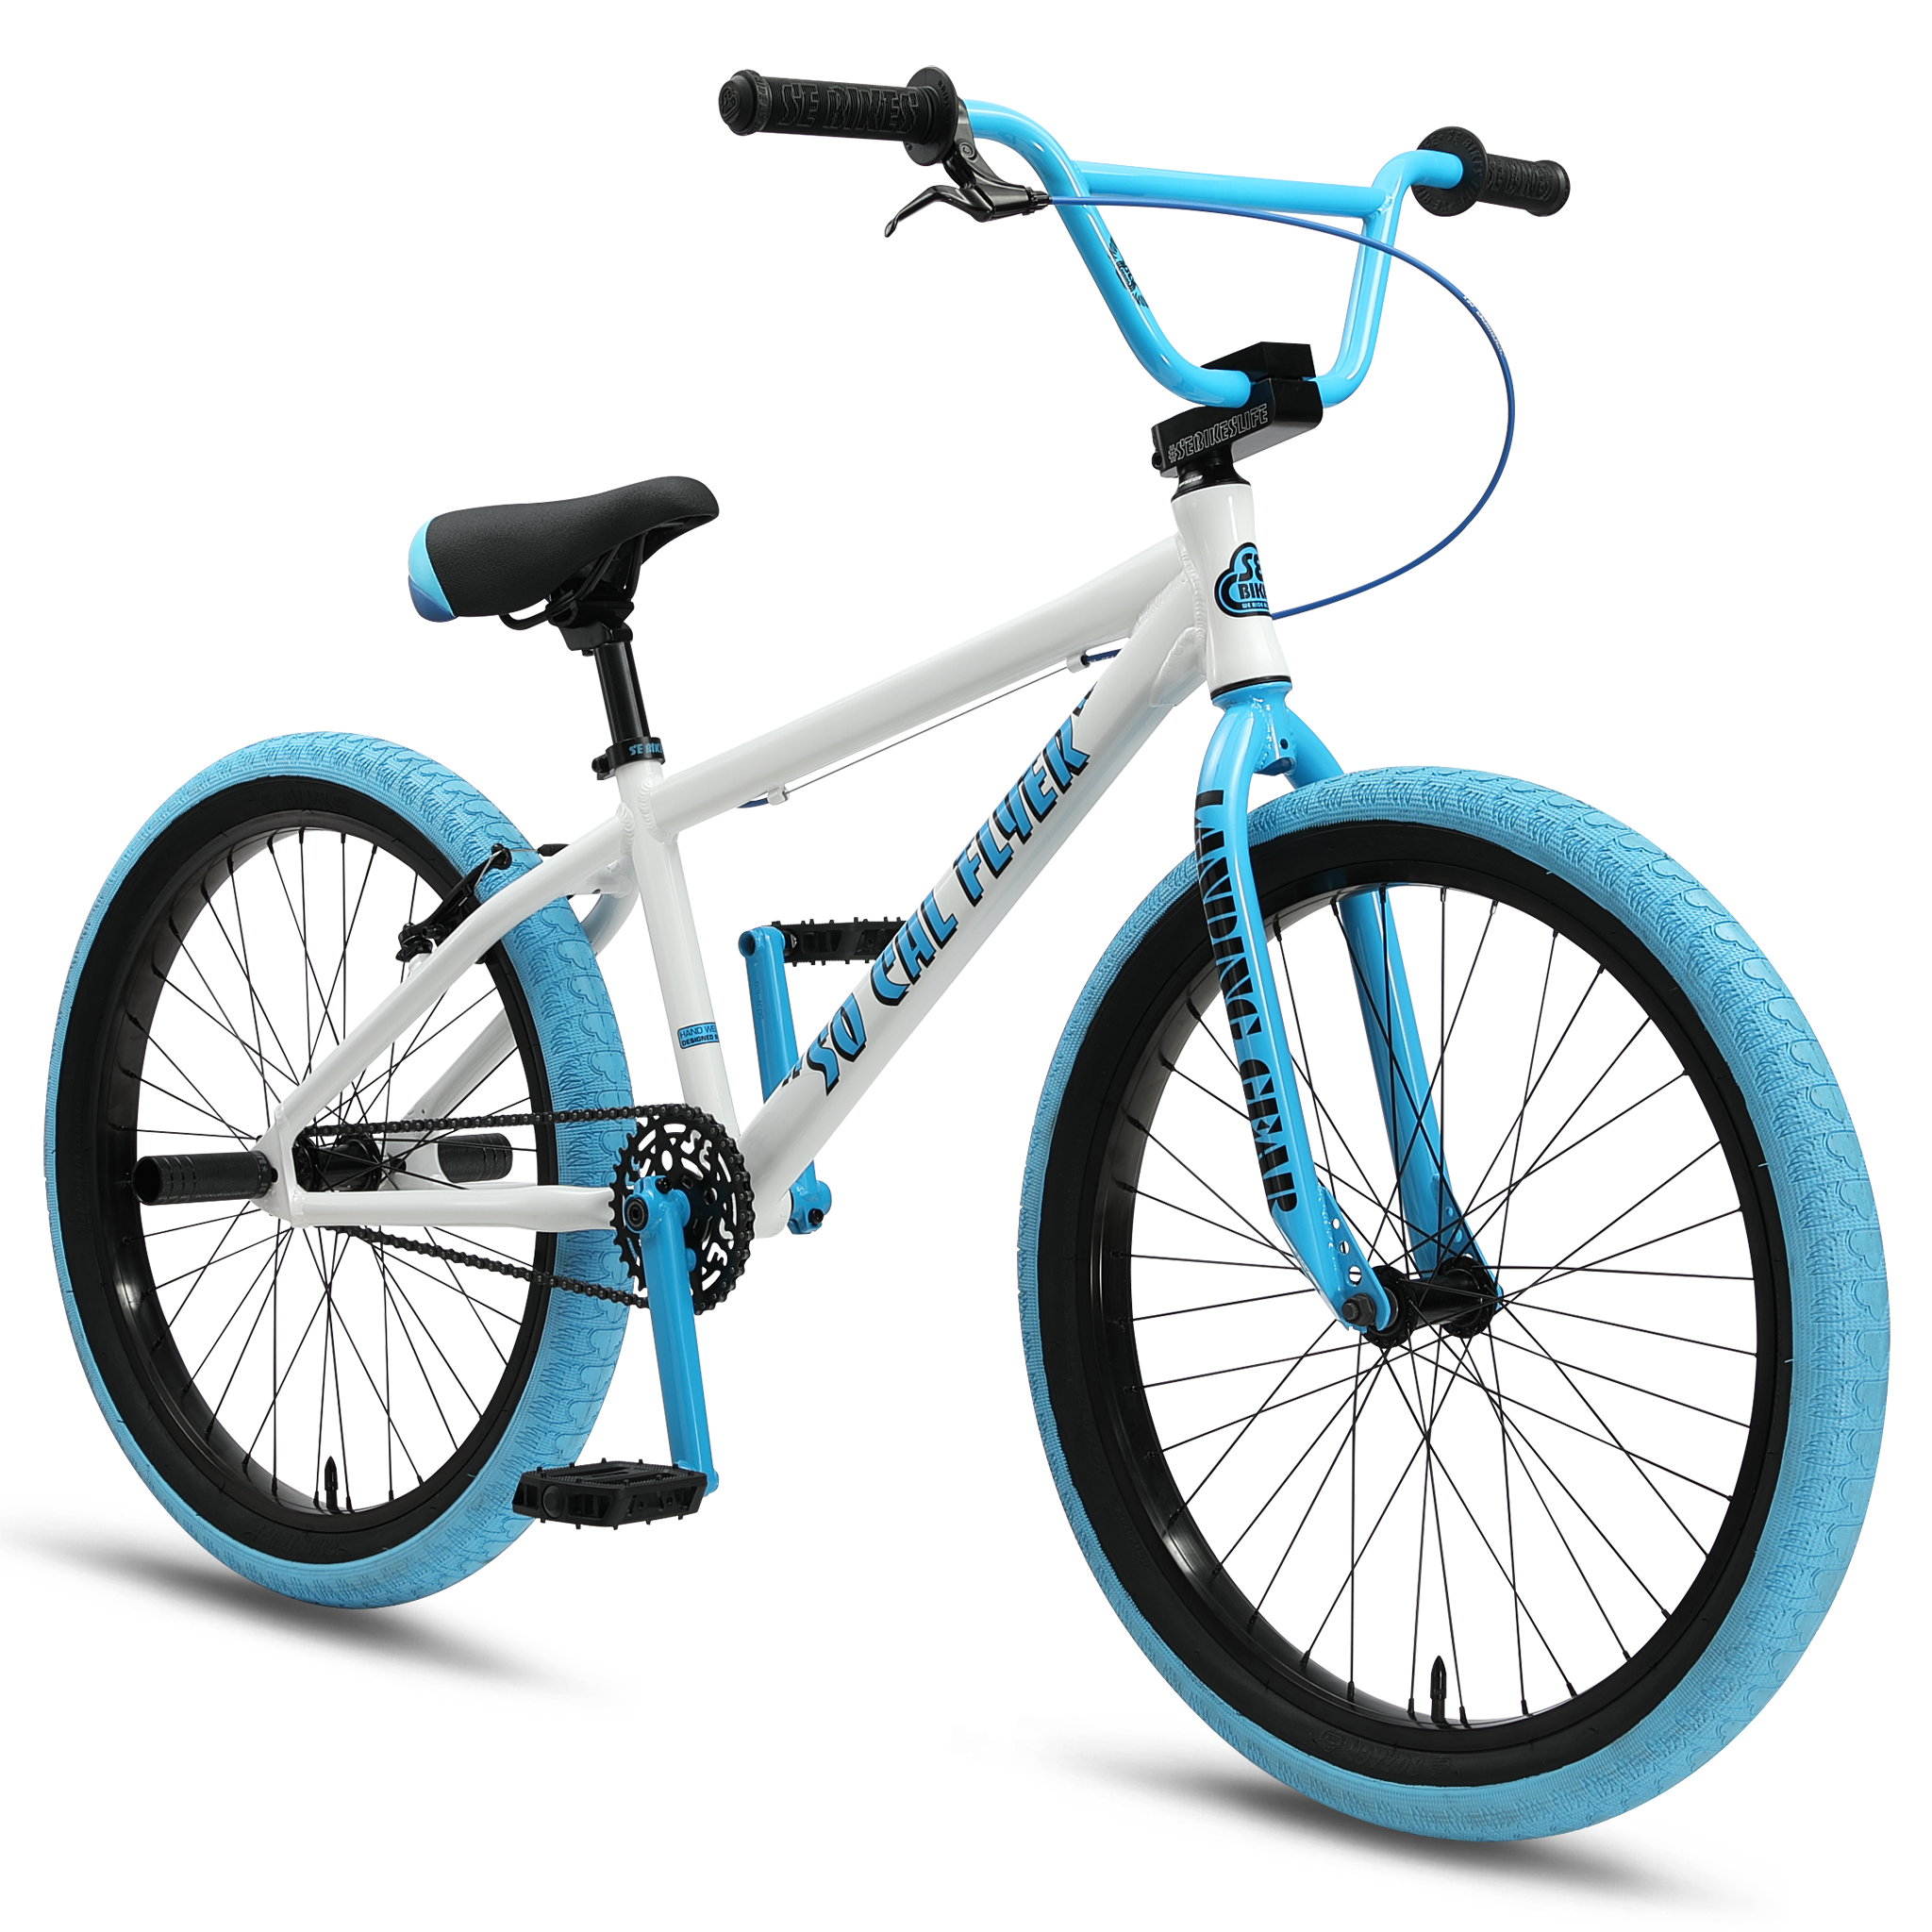 SE Bikes Gaudium - Central Wheel